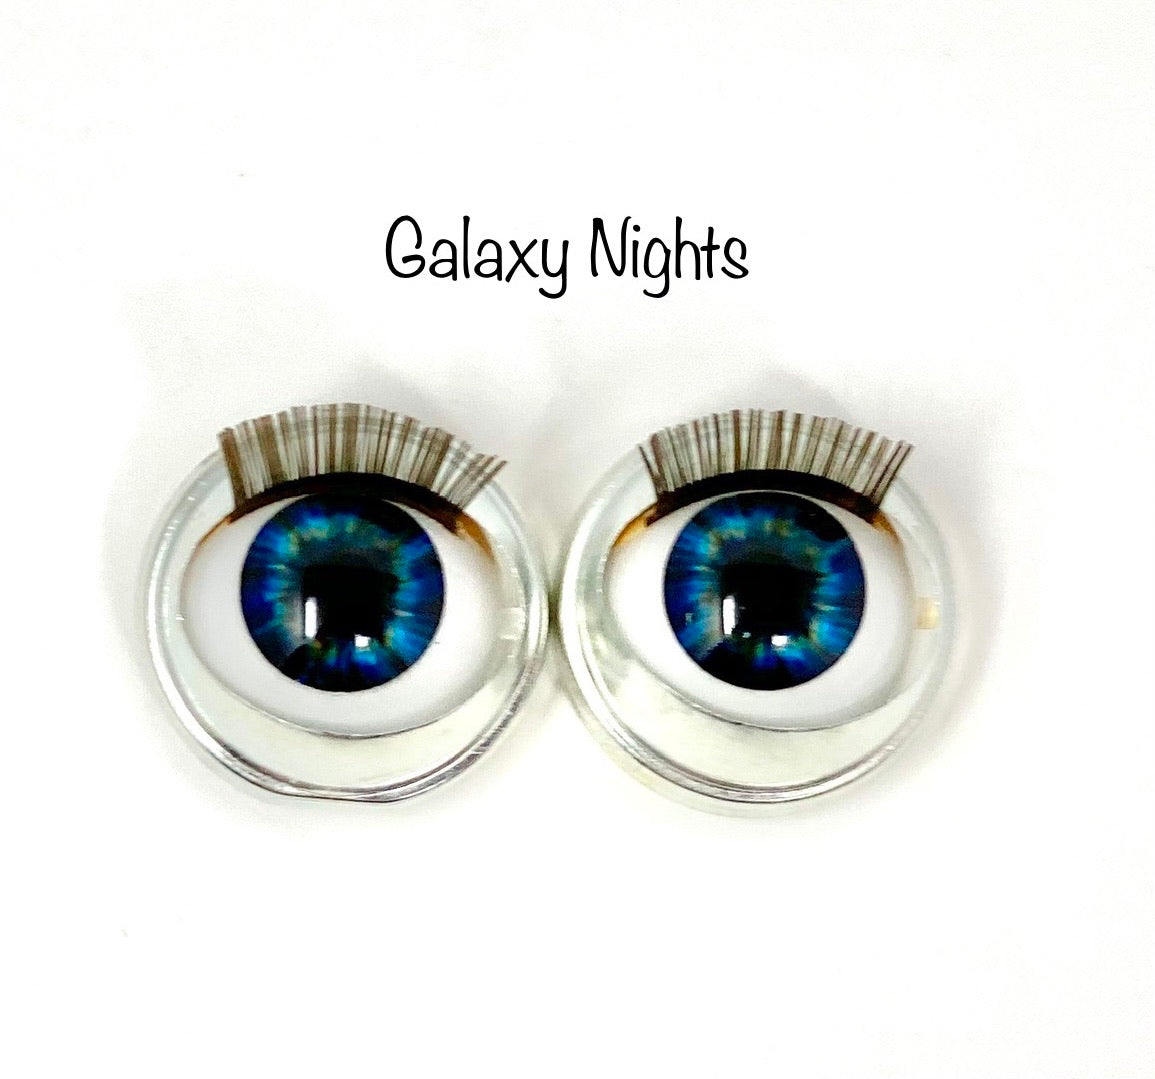 American Girl Eyes “Galaxy Nights”